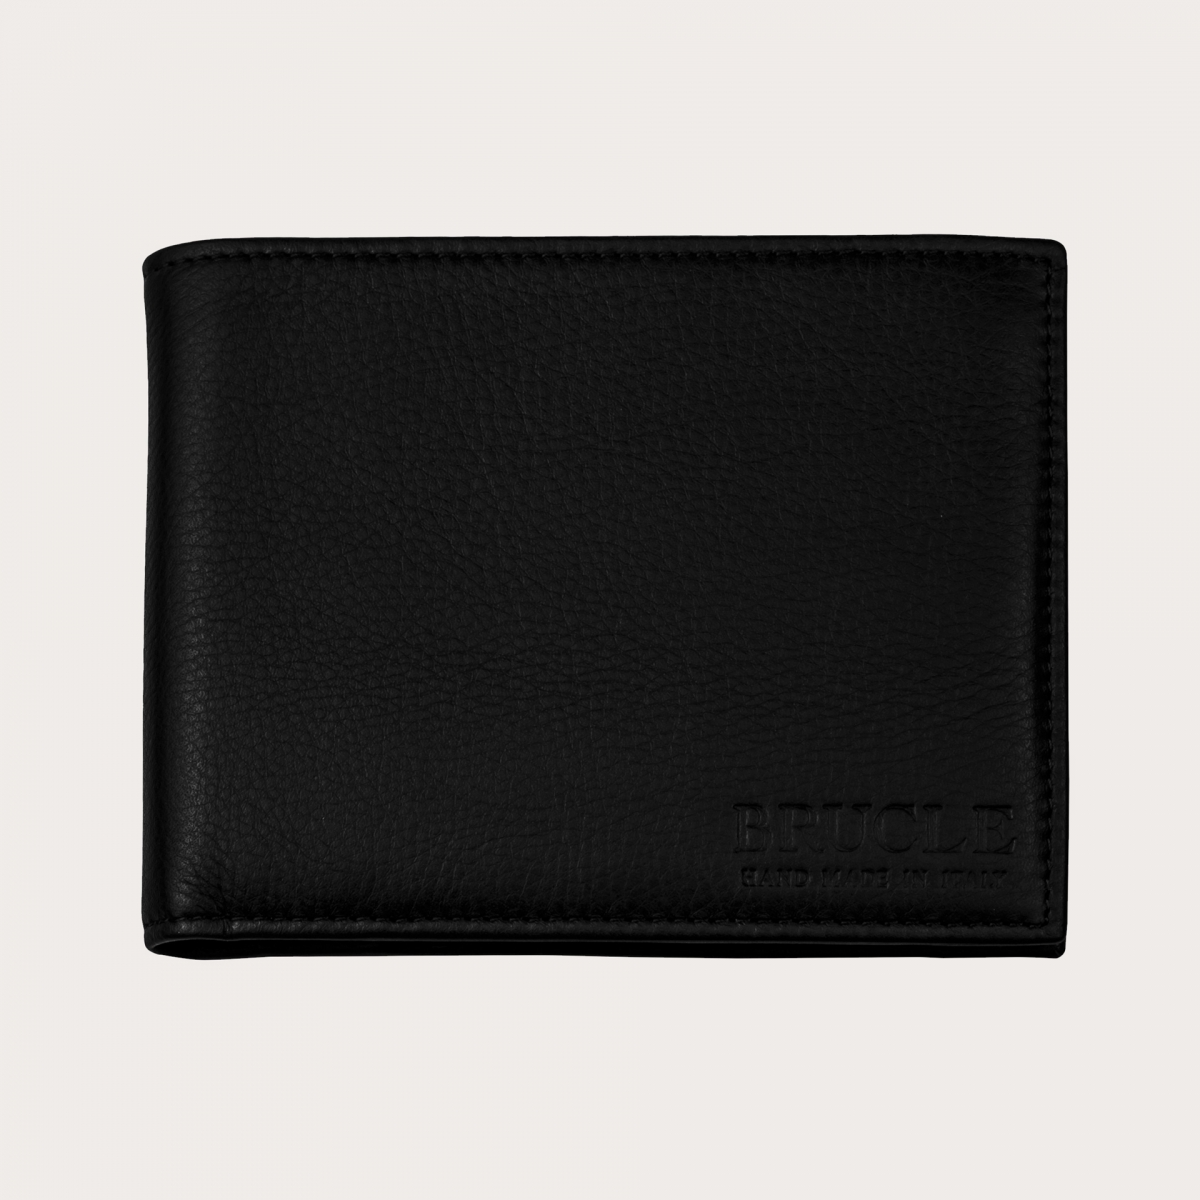 Black Premium Leather Bifold Wallet